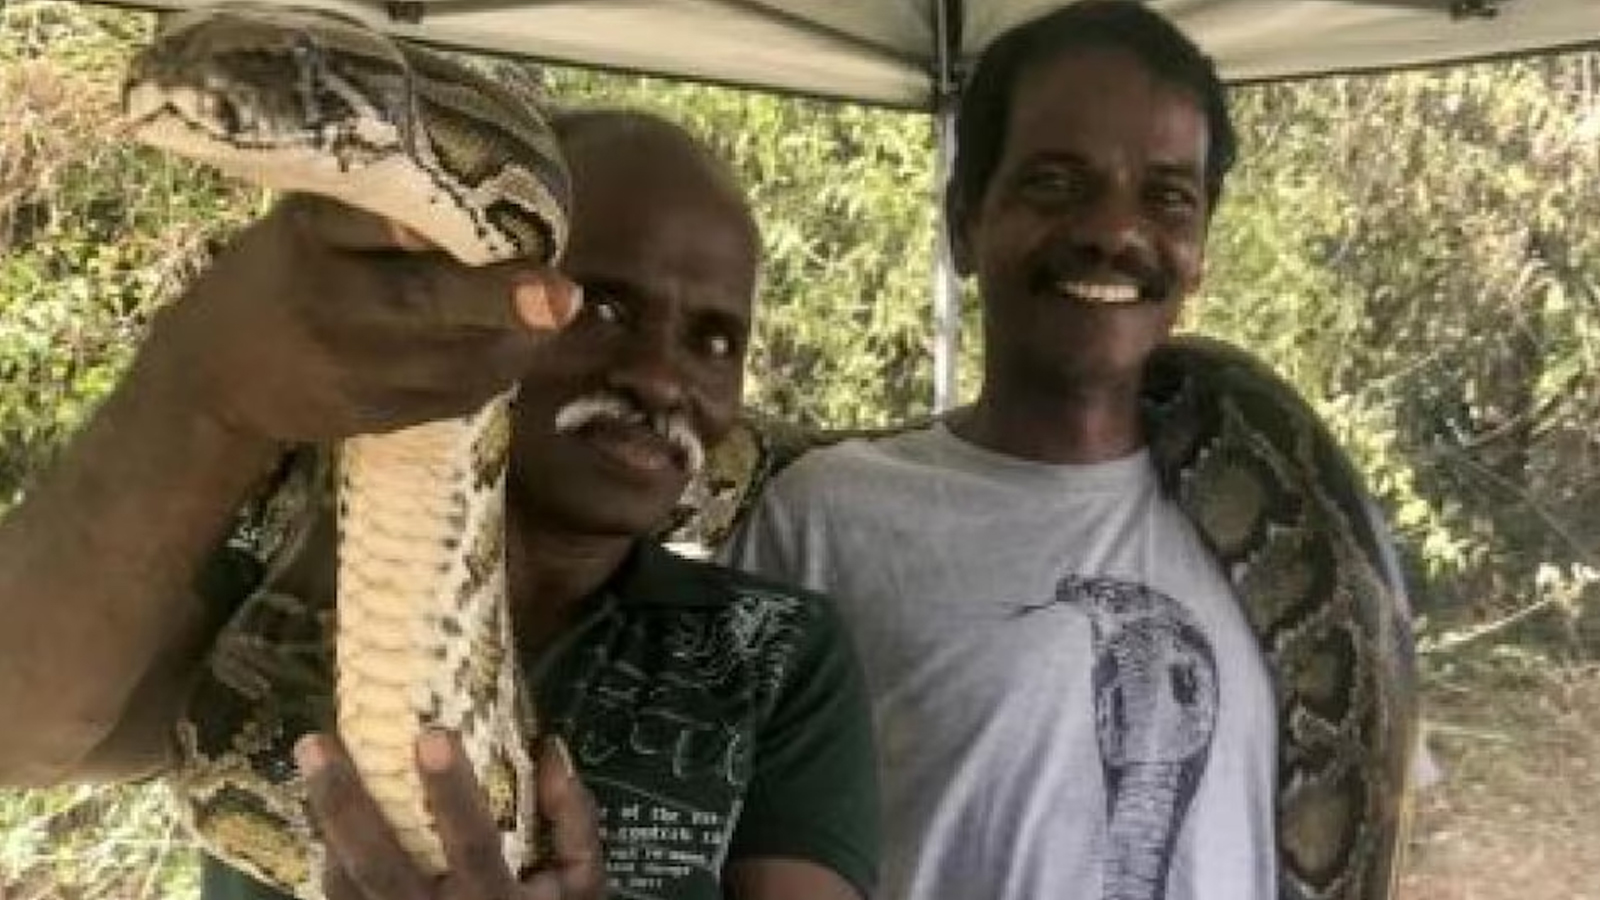 Snake Catcher got Padma Shri